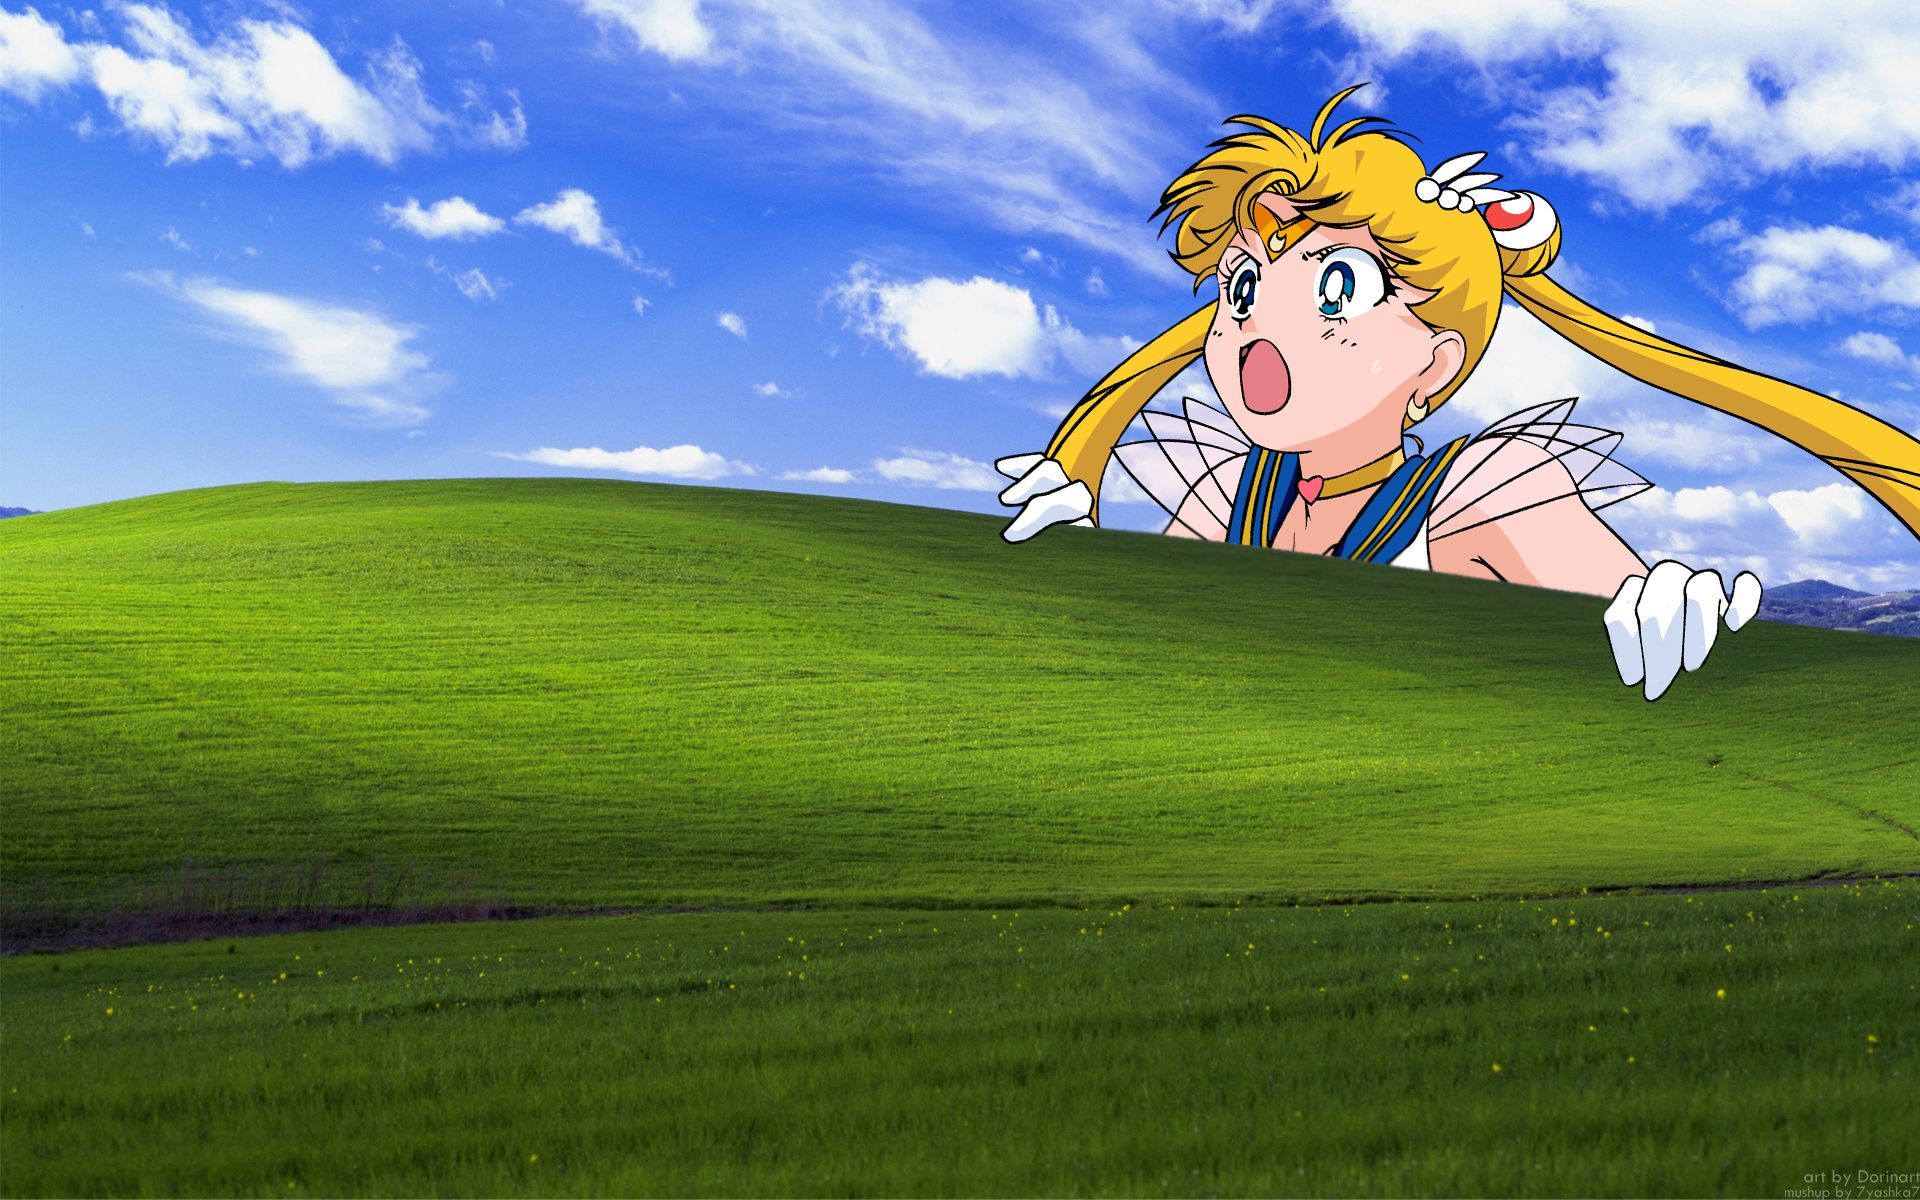 Sailor Moon wallpaper. Sailor moon wallpaper, Desktop wallpaper